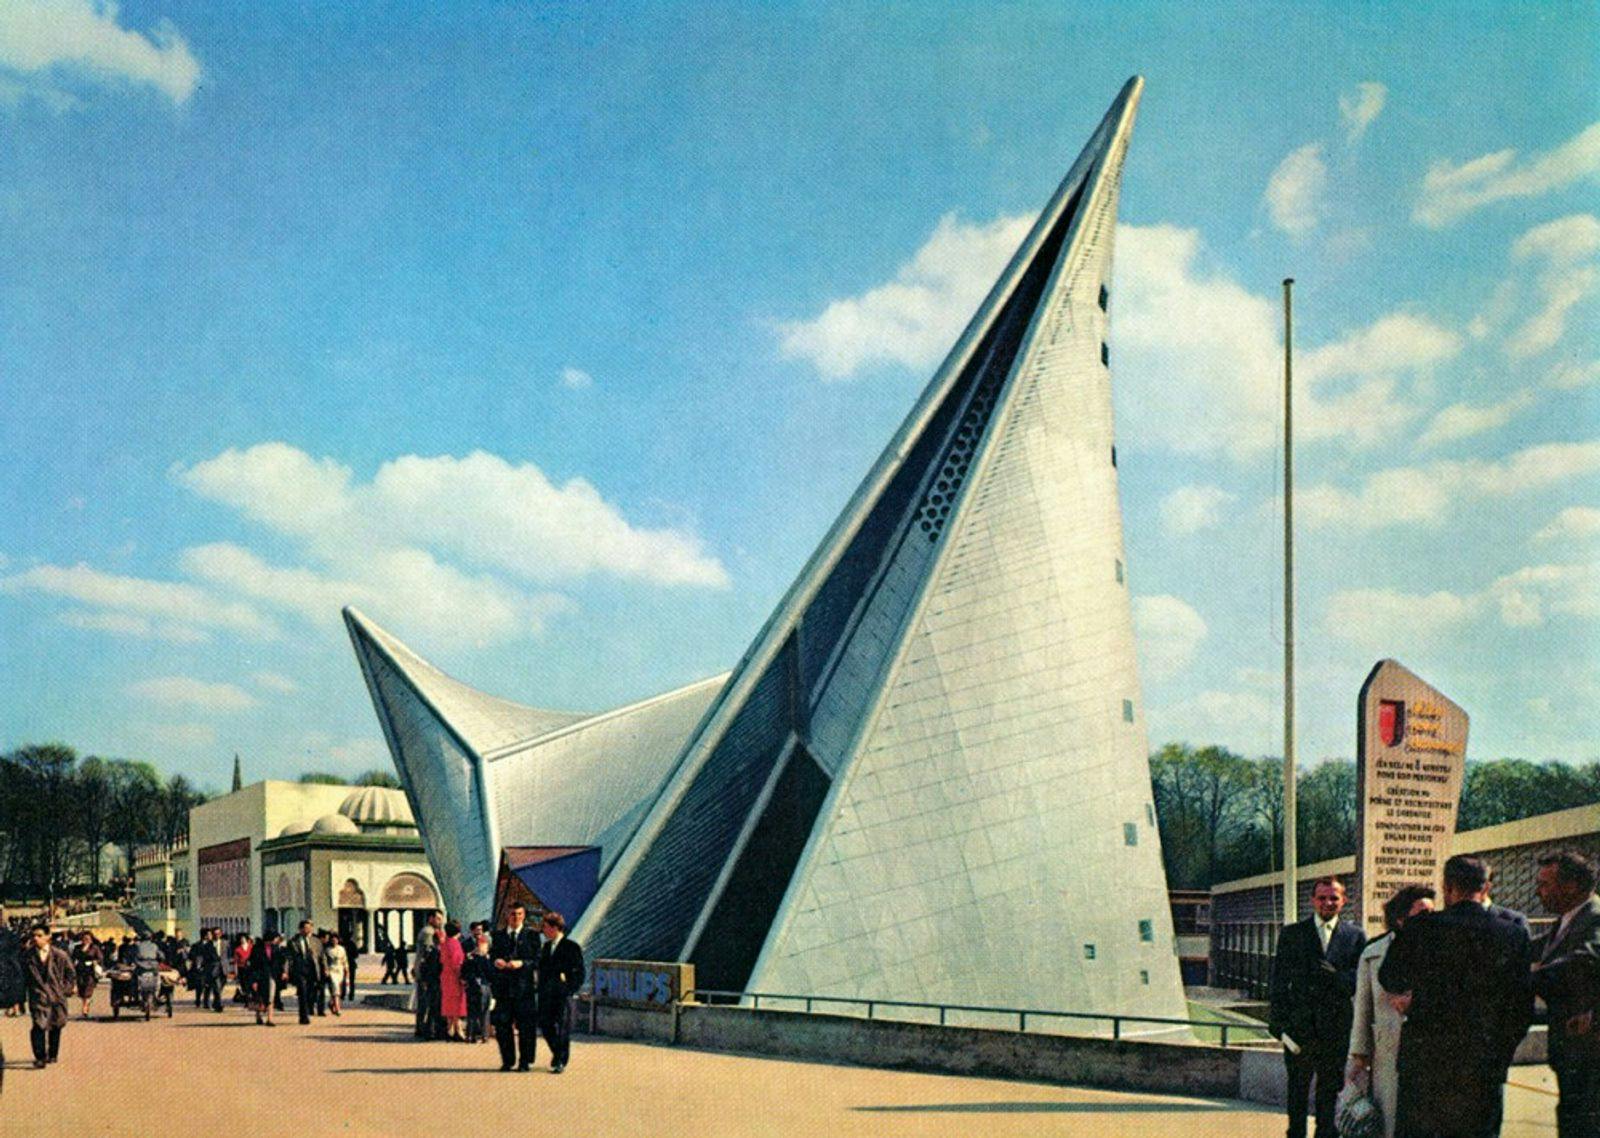 The Philips Pavilion